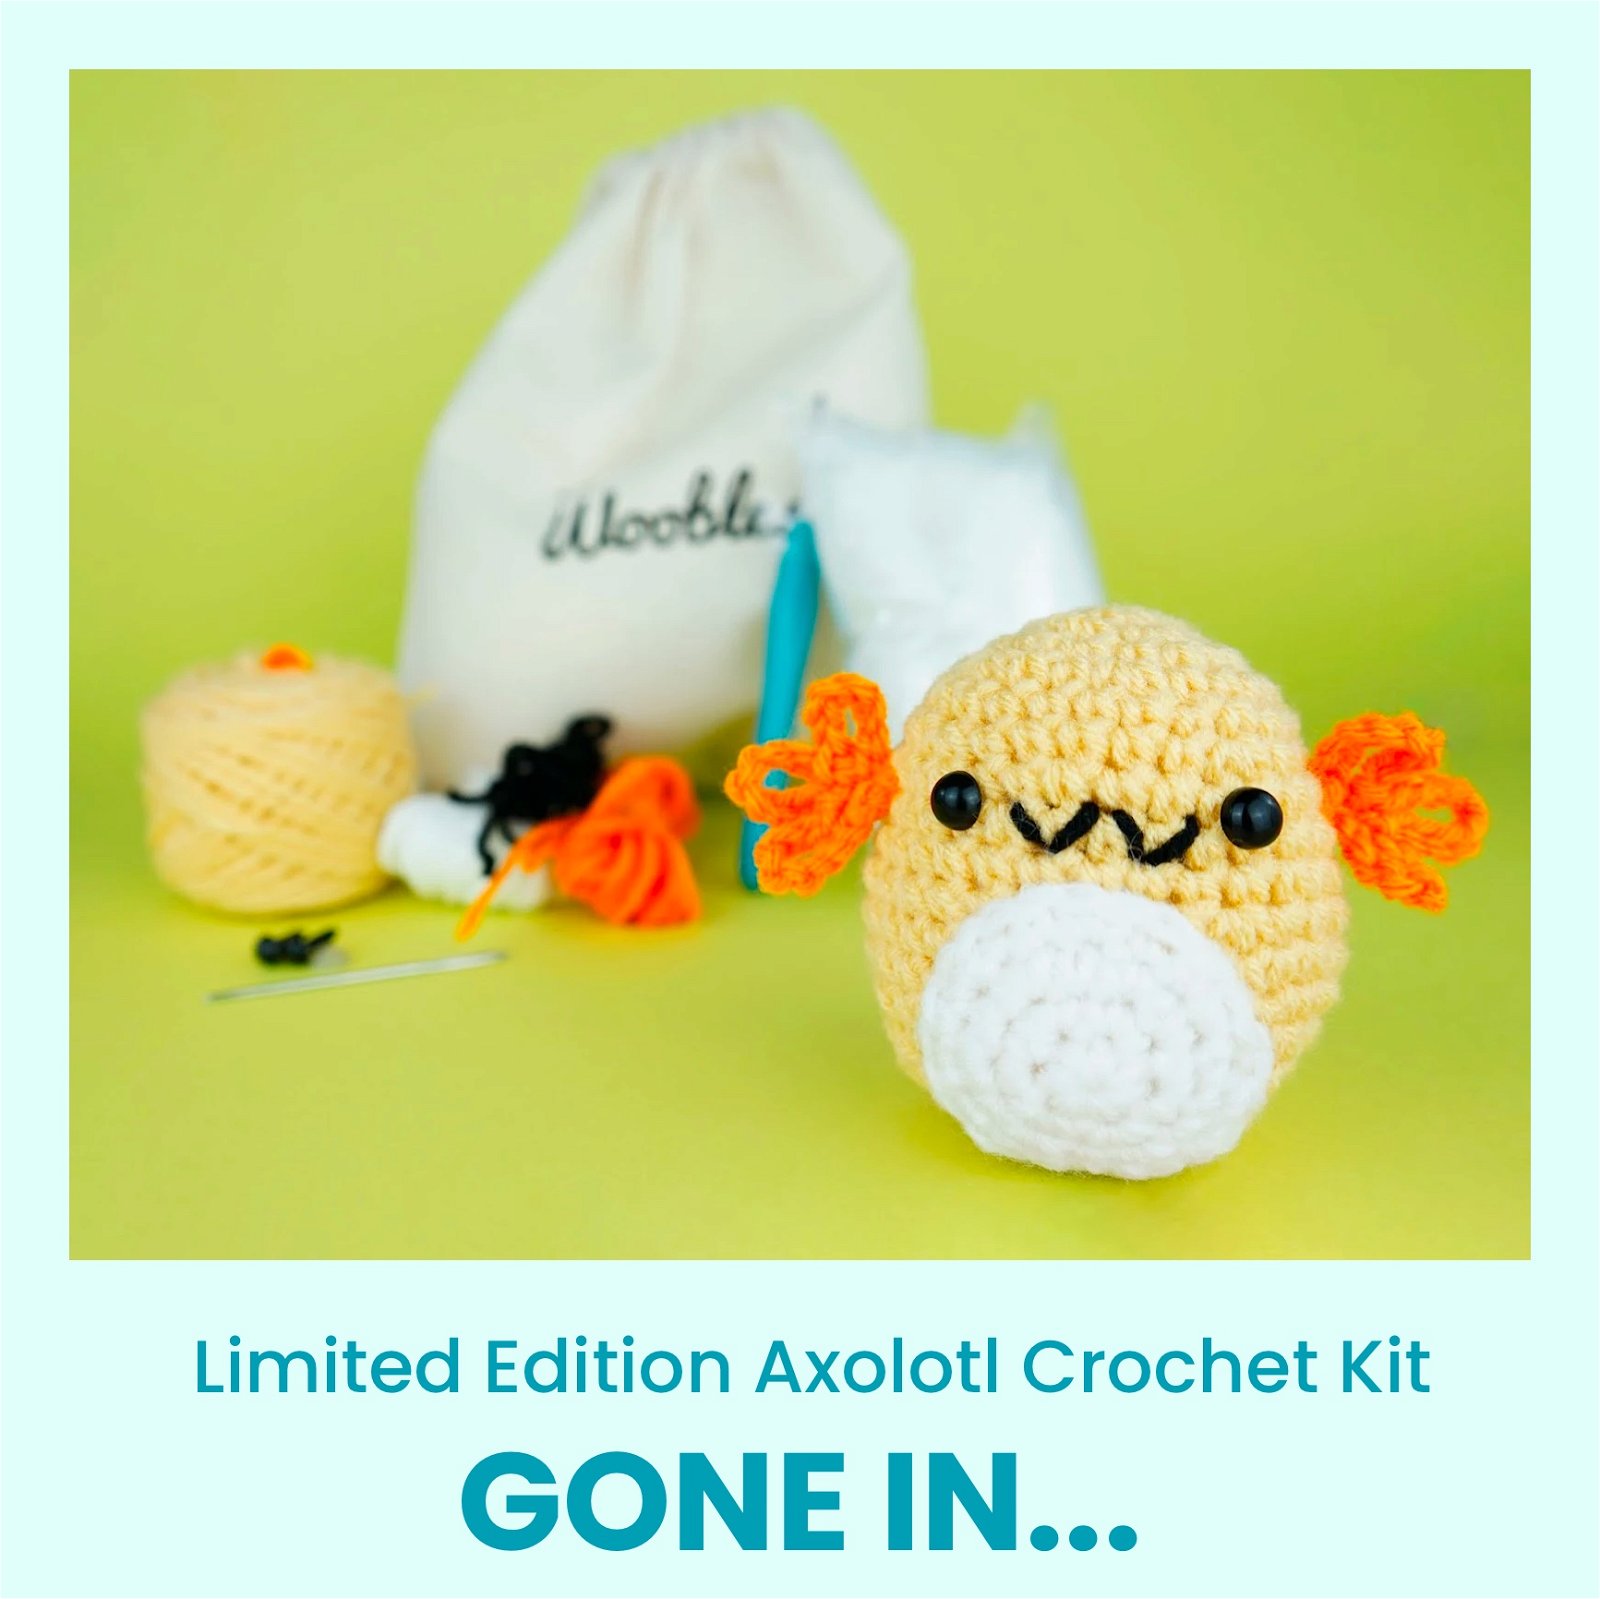 Limited Edition Crochet Kits